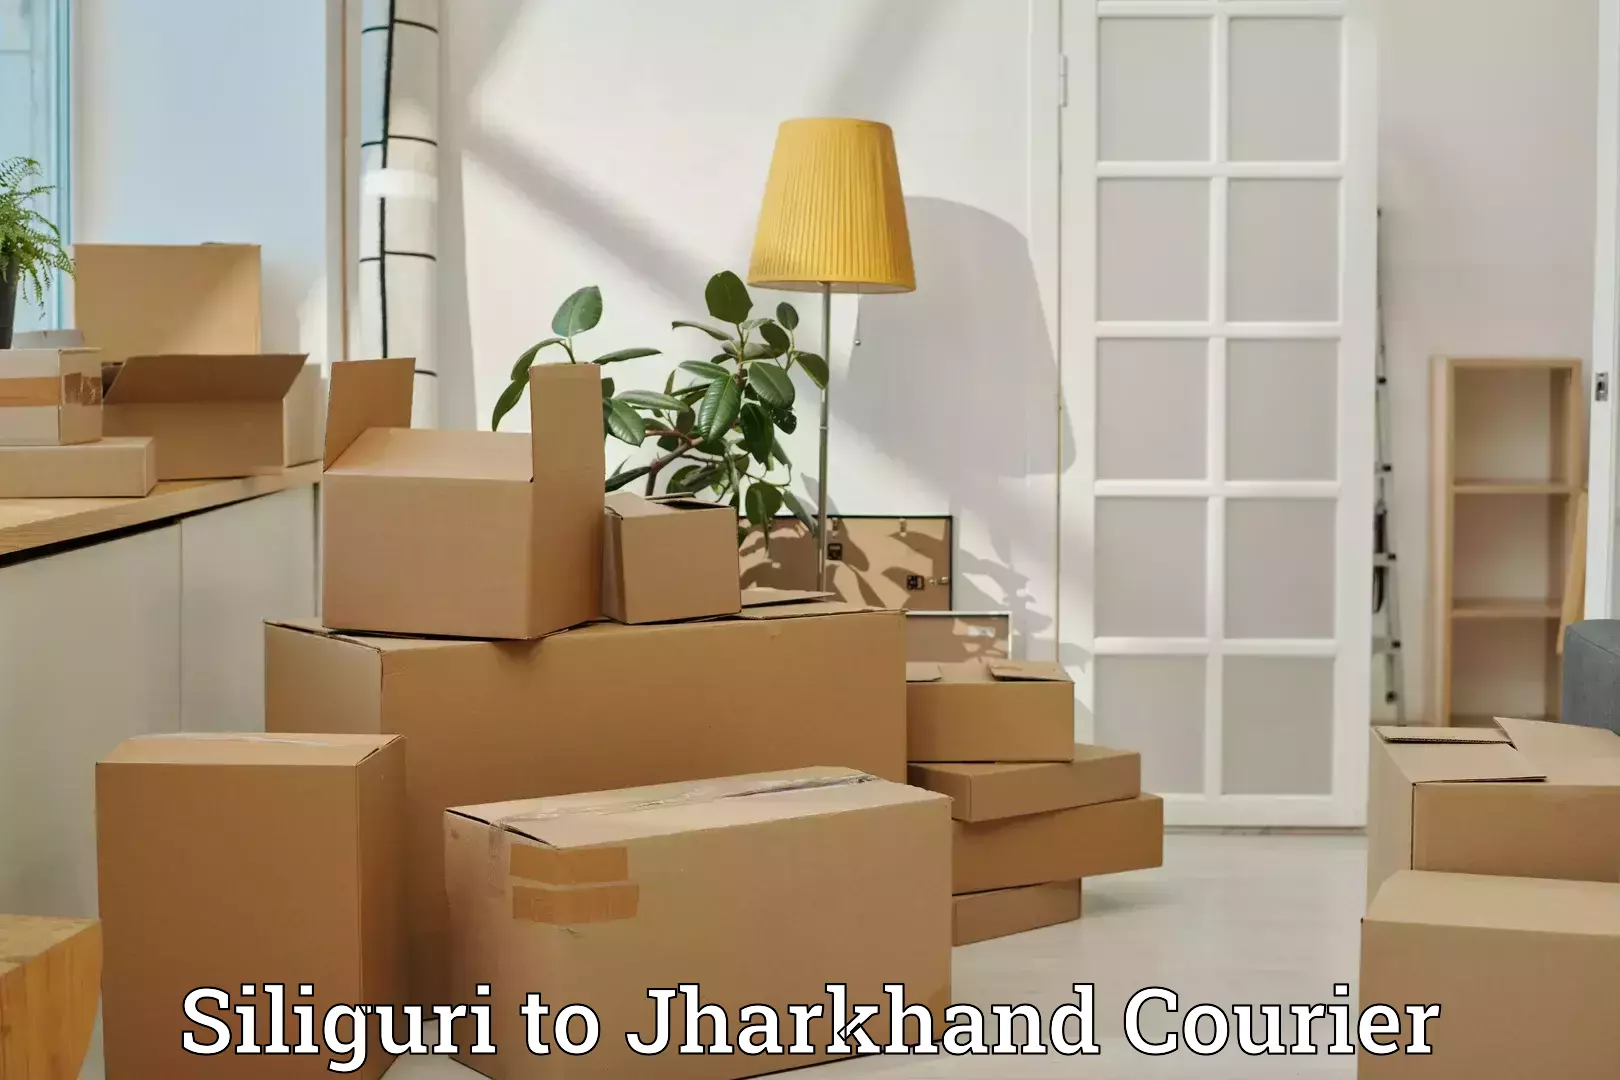 Urgent luggage shipment in Siliguri to Madhupur